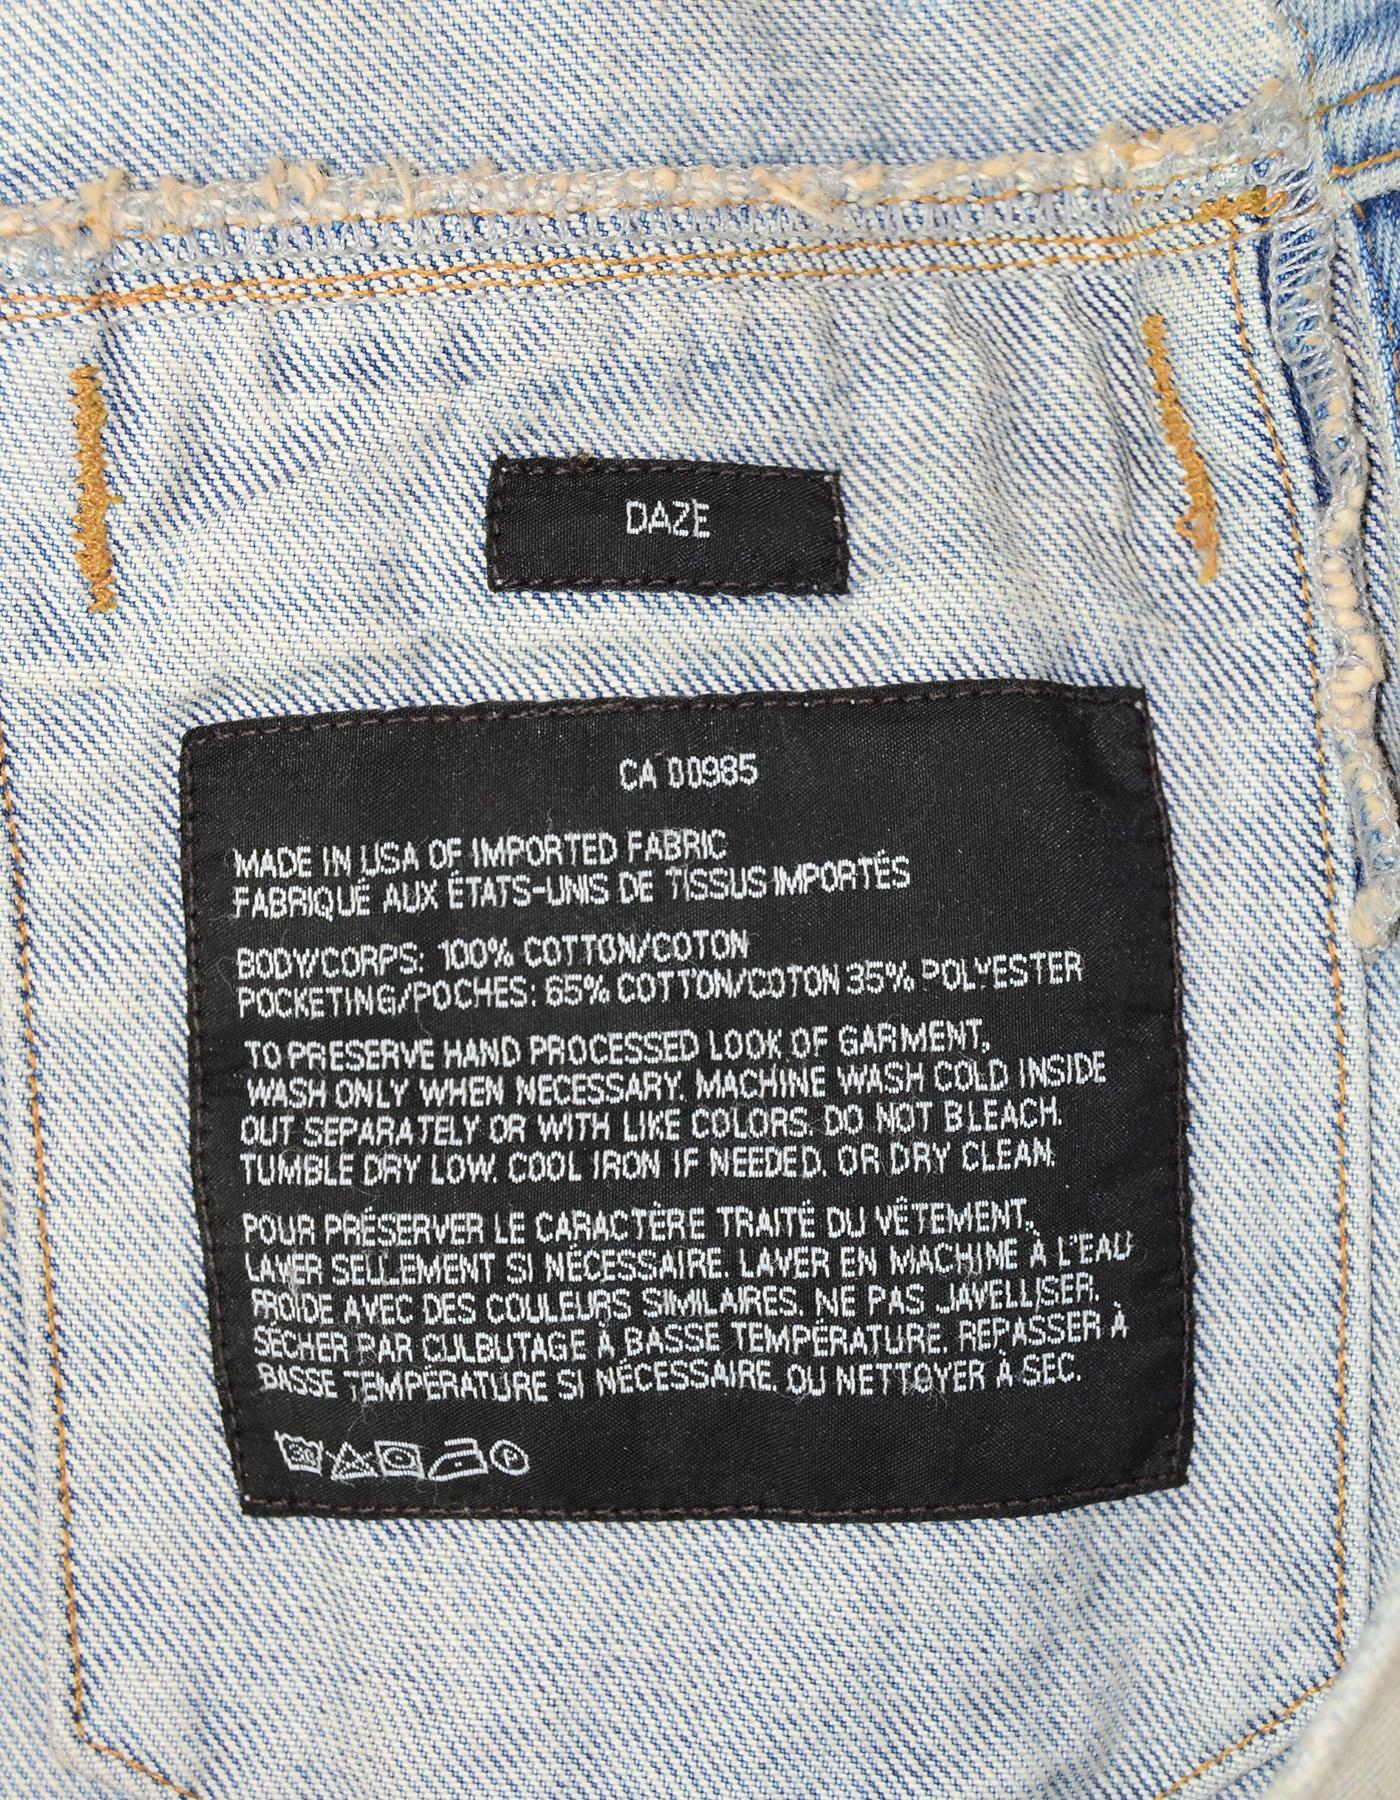 Gray Alexander Wang Daze Scratch Distressed Oversized Jean Jacket sz S rt. $495